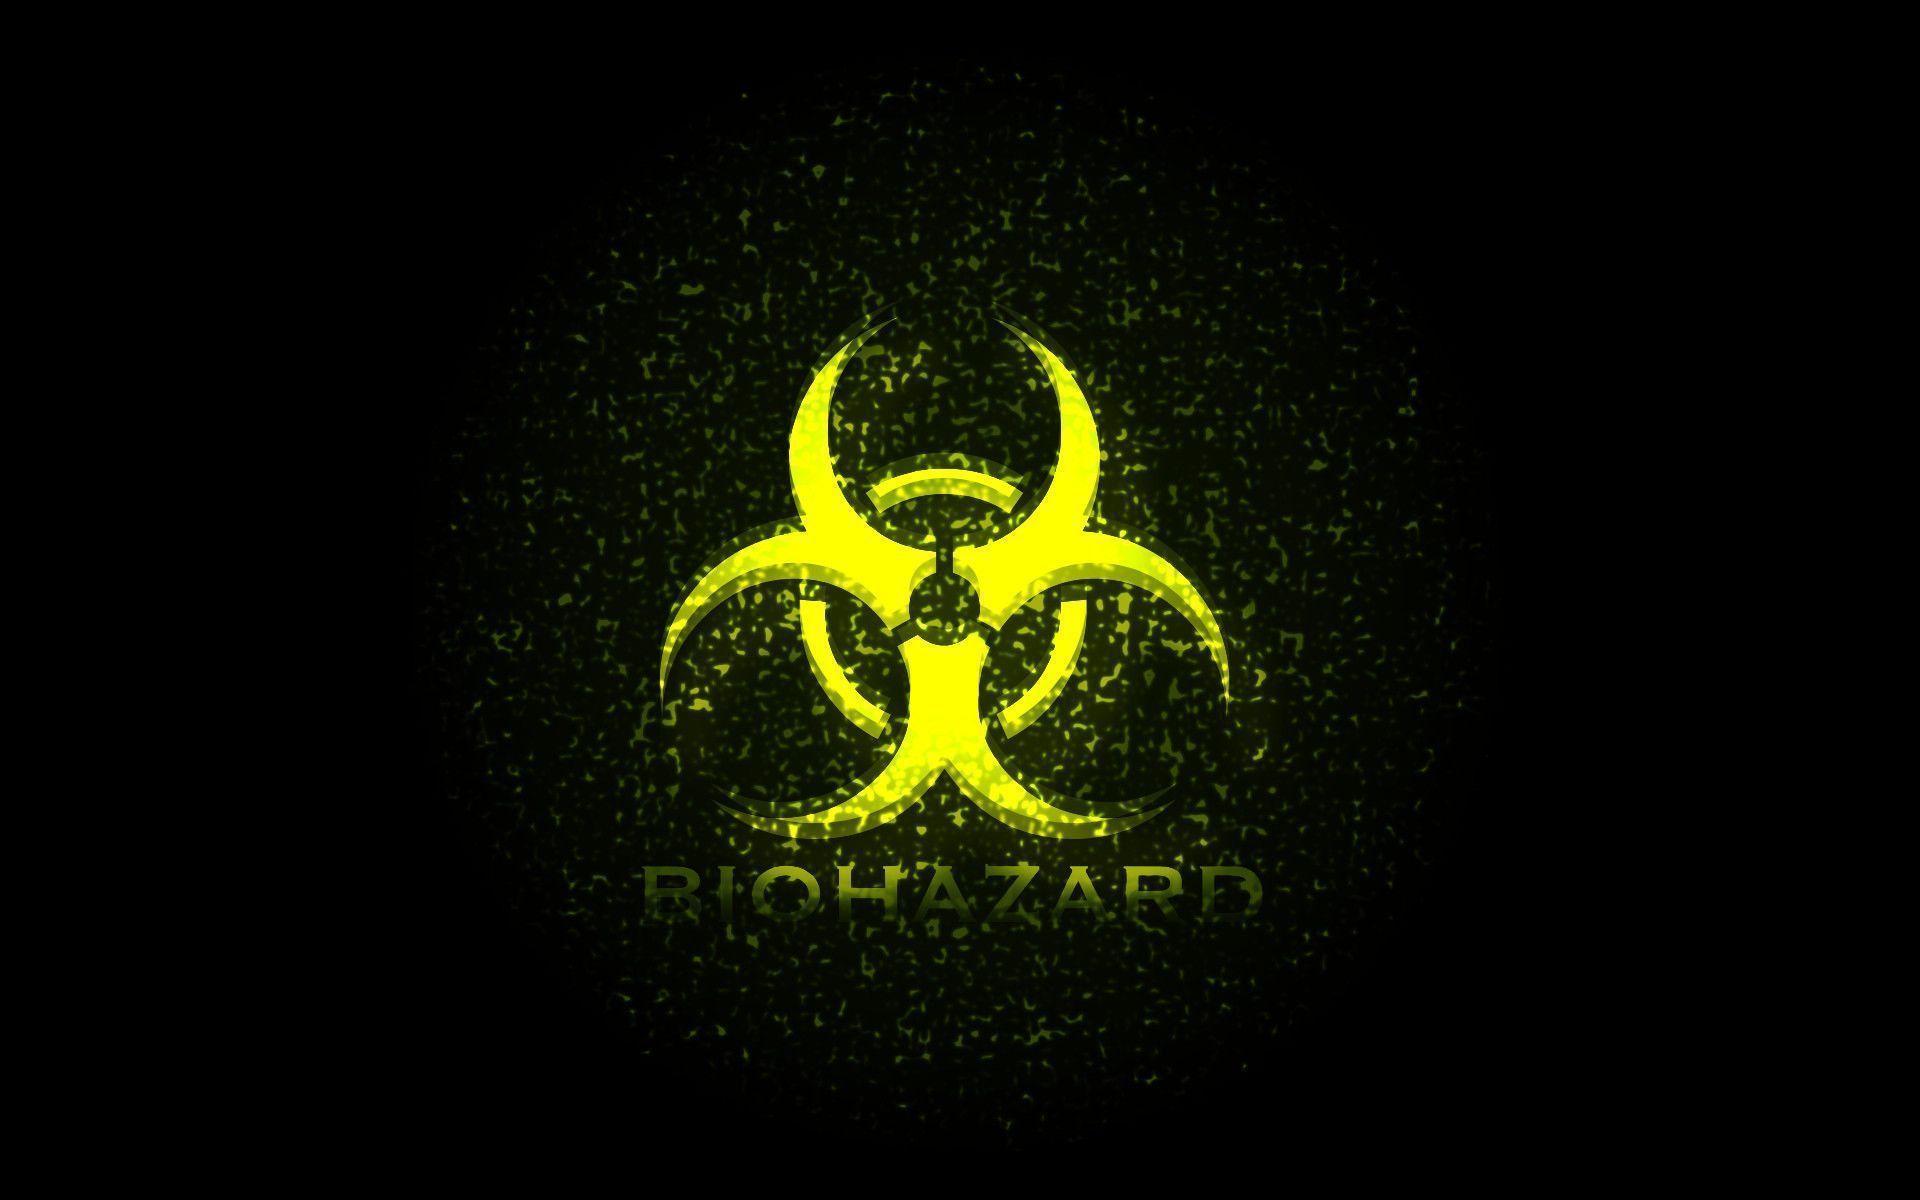 Biohazard Wallpaper HD wallpaper search